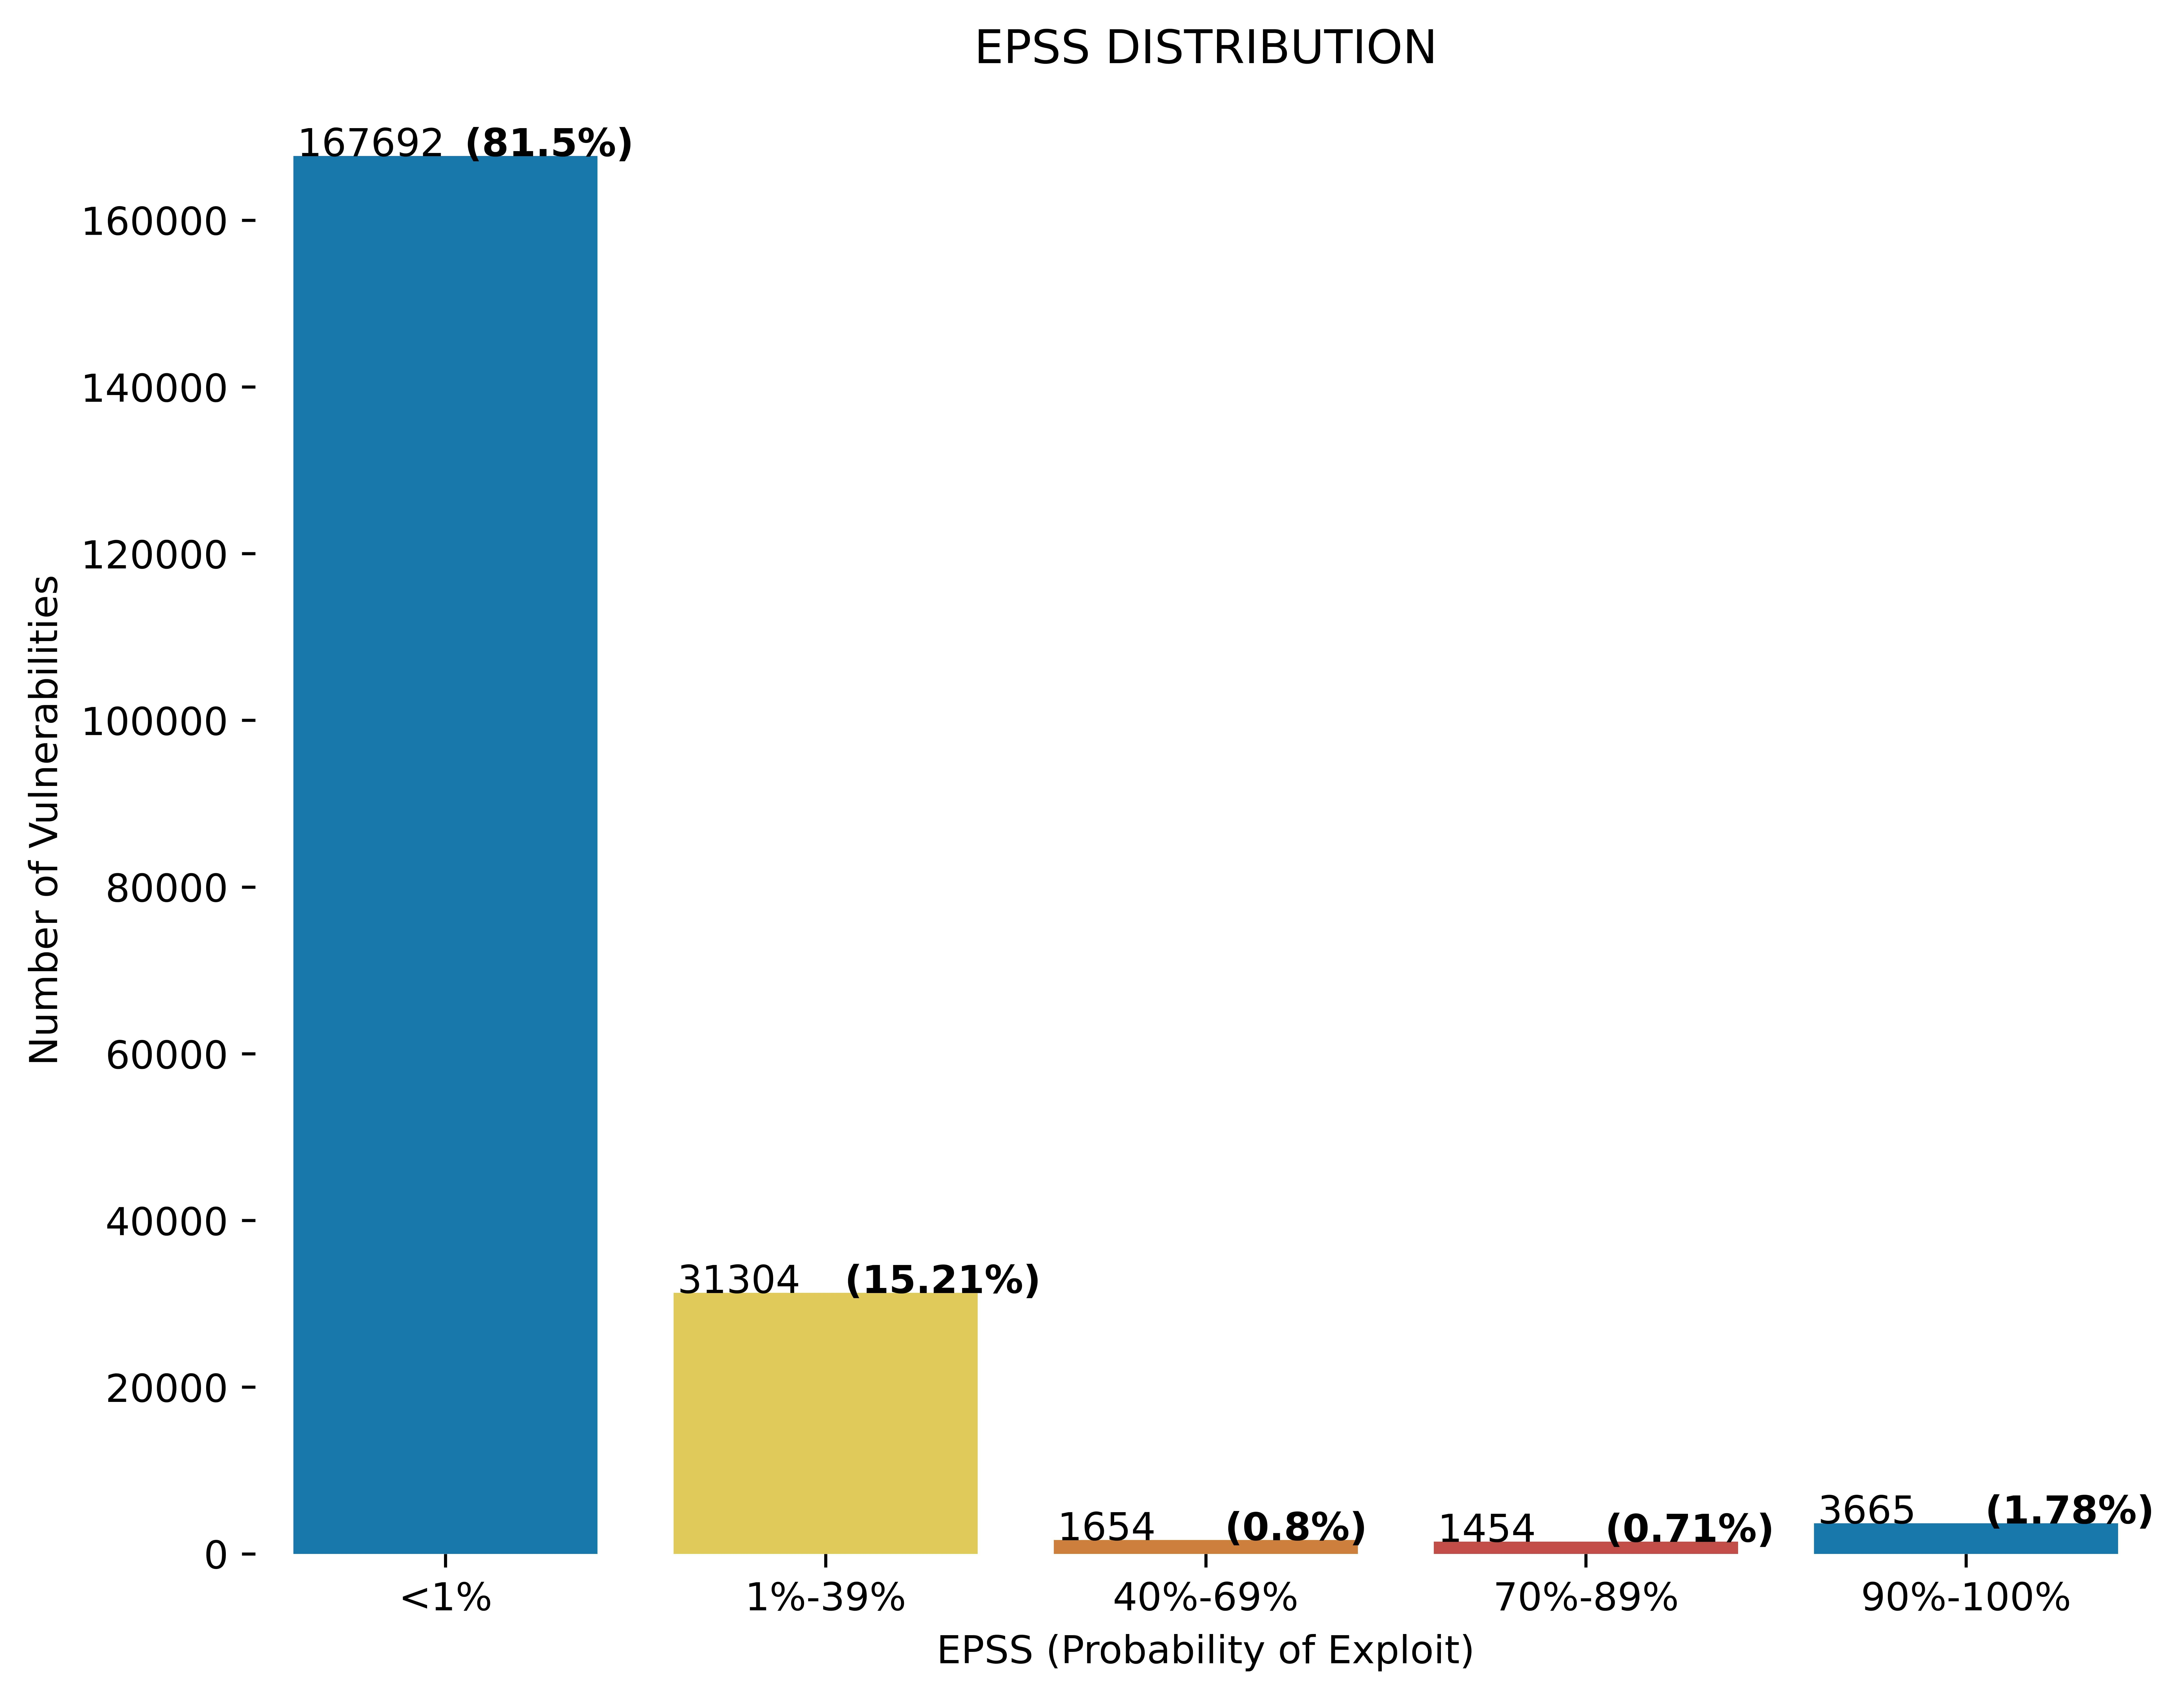 EPSS Score distribution for Vulnerabilities